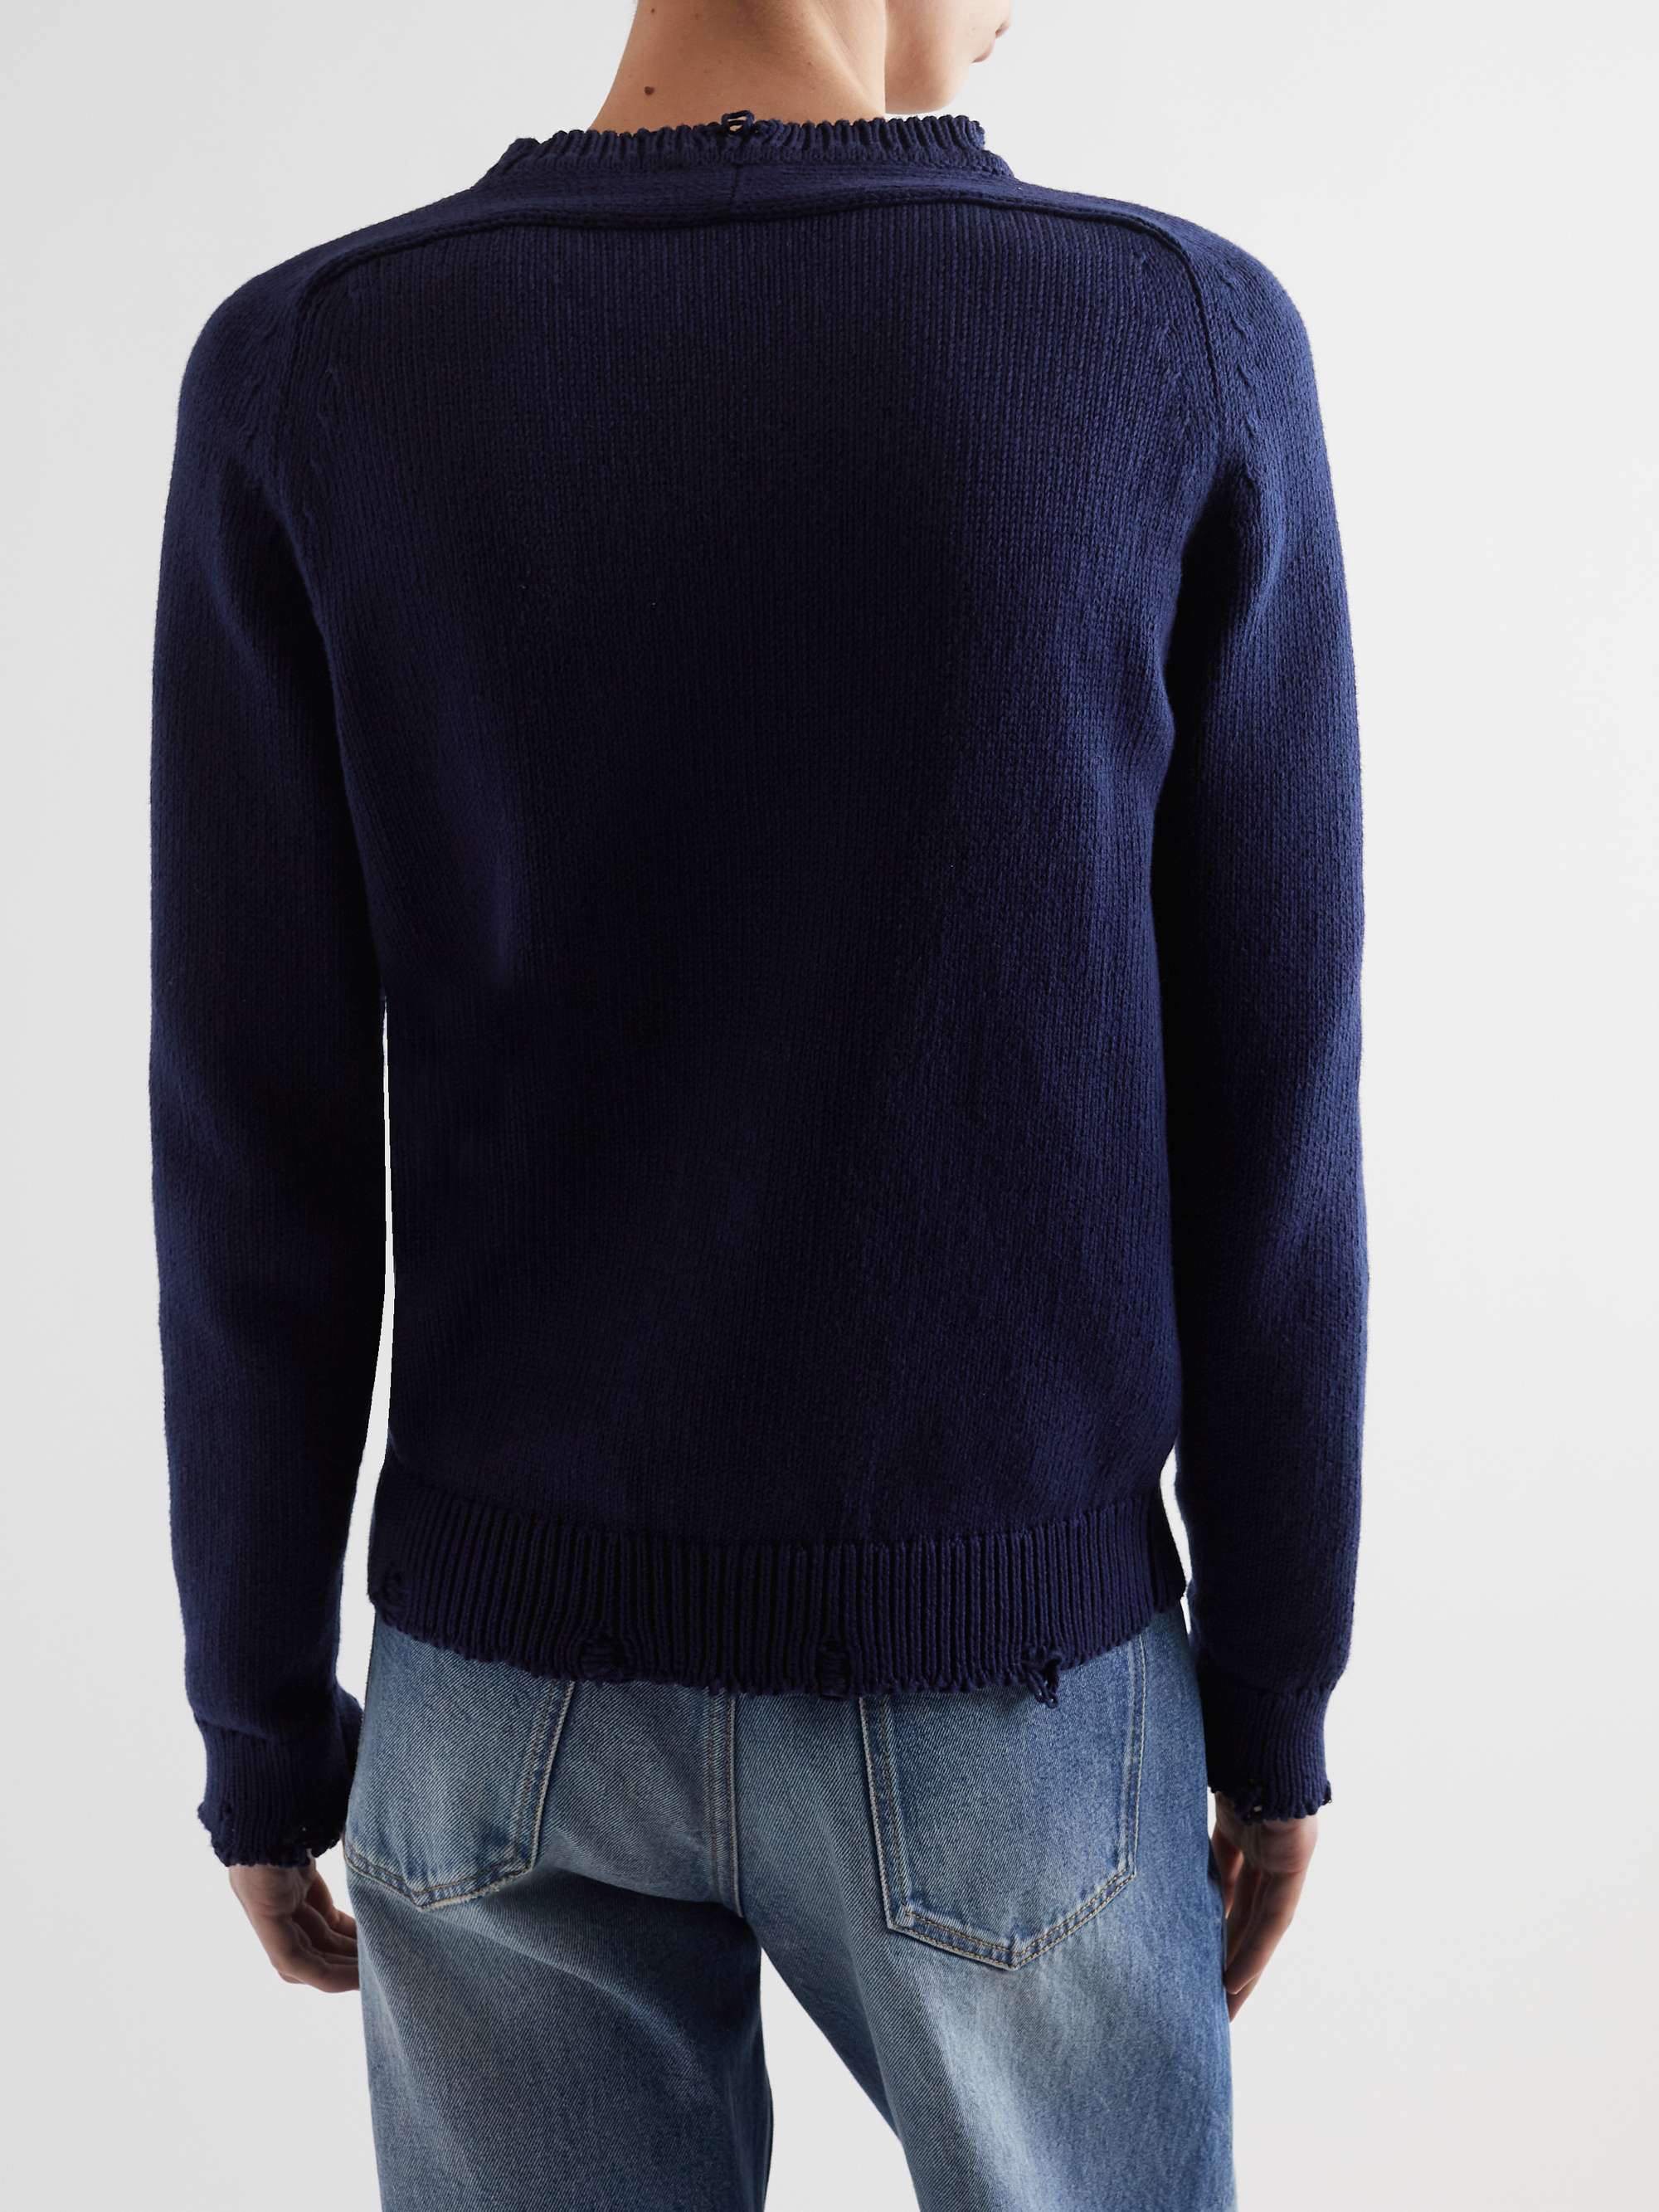 SAINT LAURENT Distressed Cotton Sweater for Men | MR PORTER